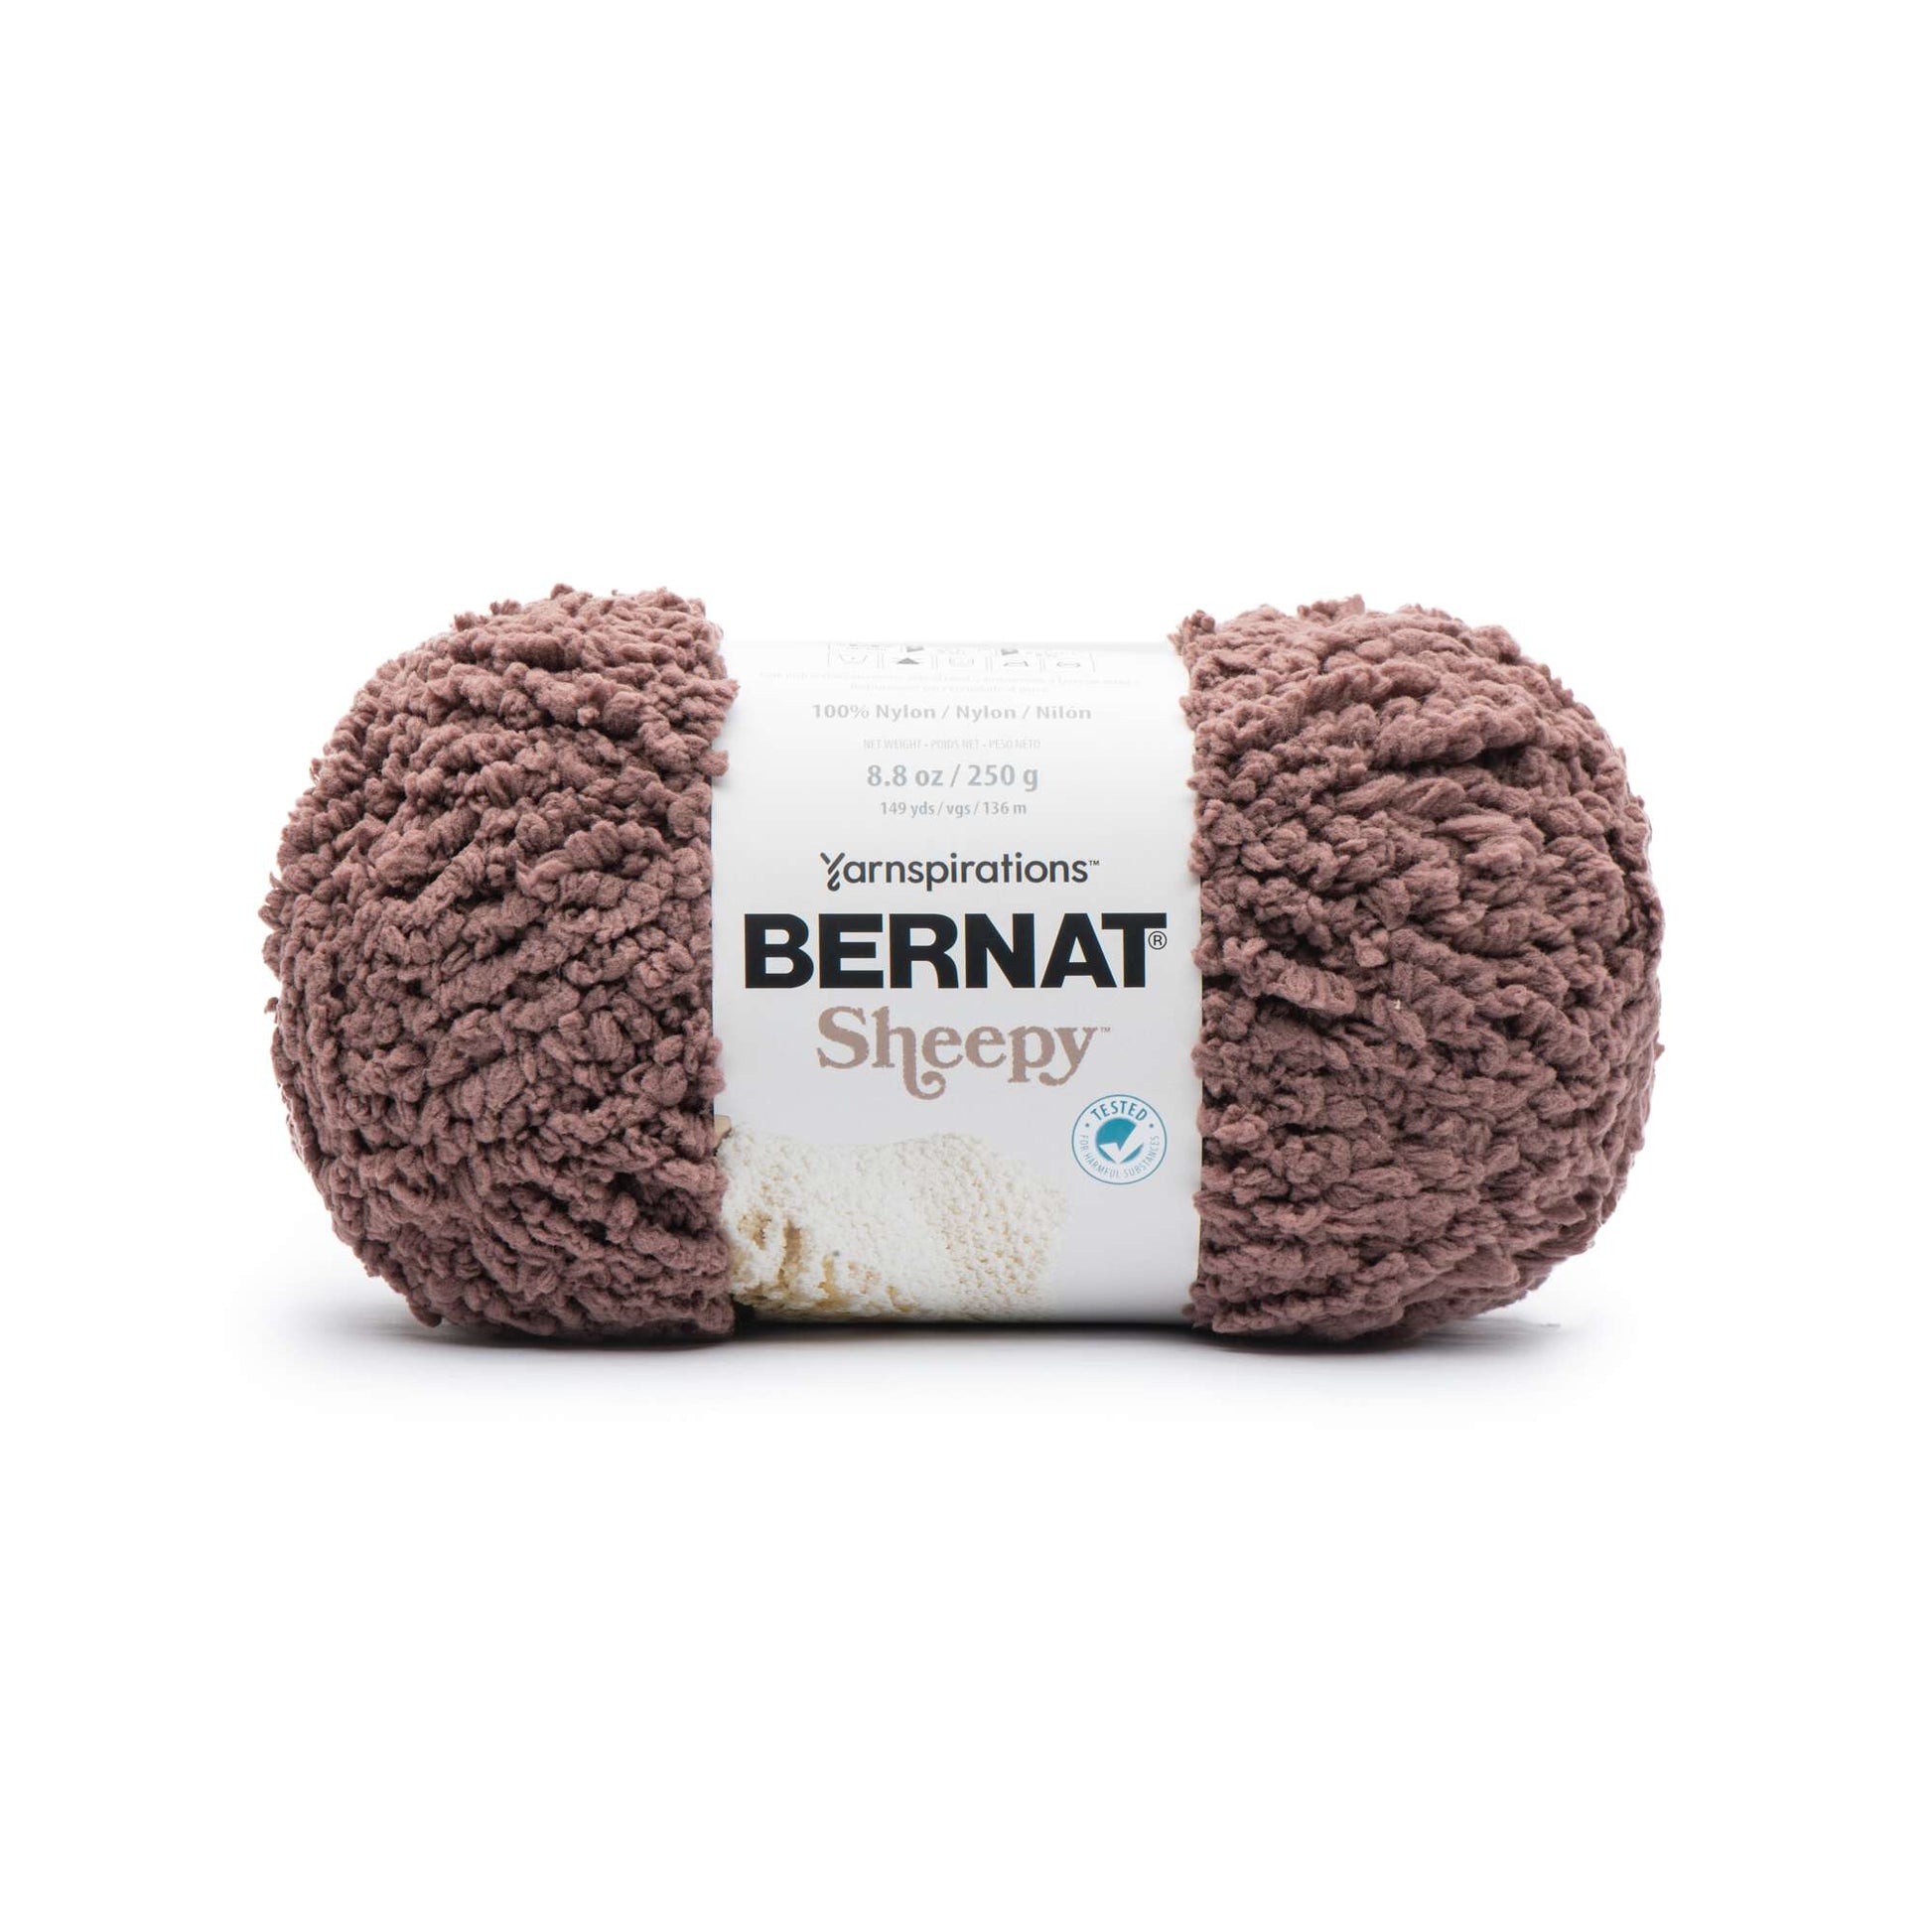 Bernat Sheepy Yarn